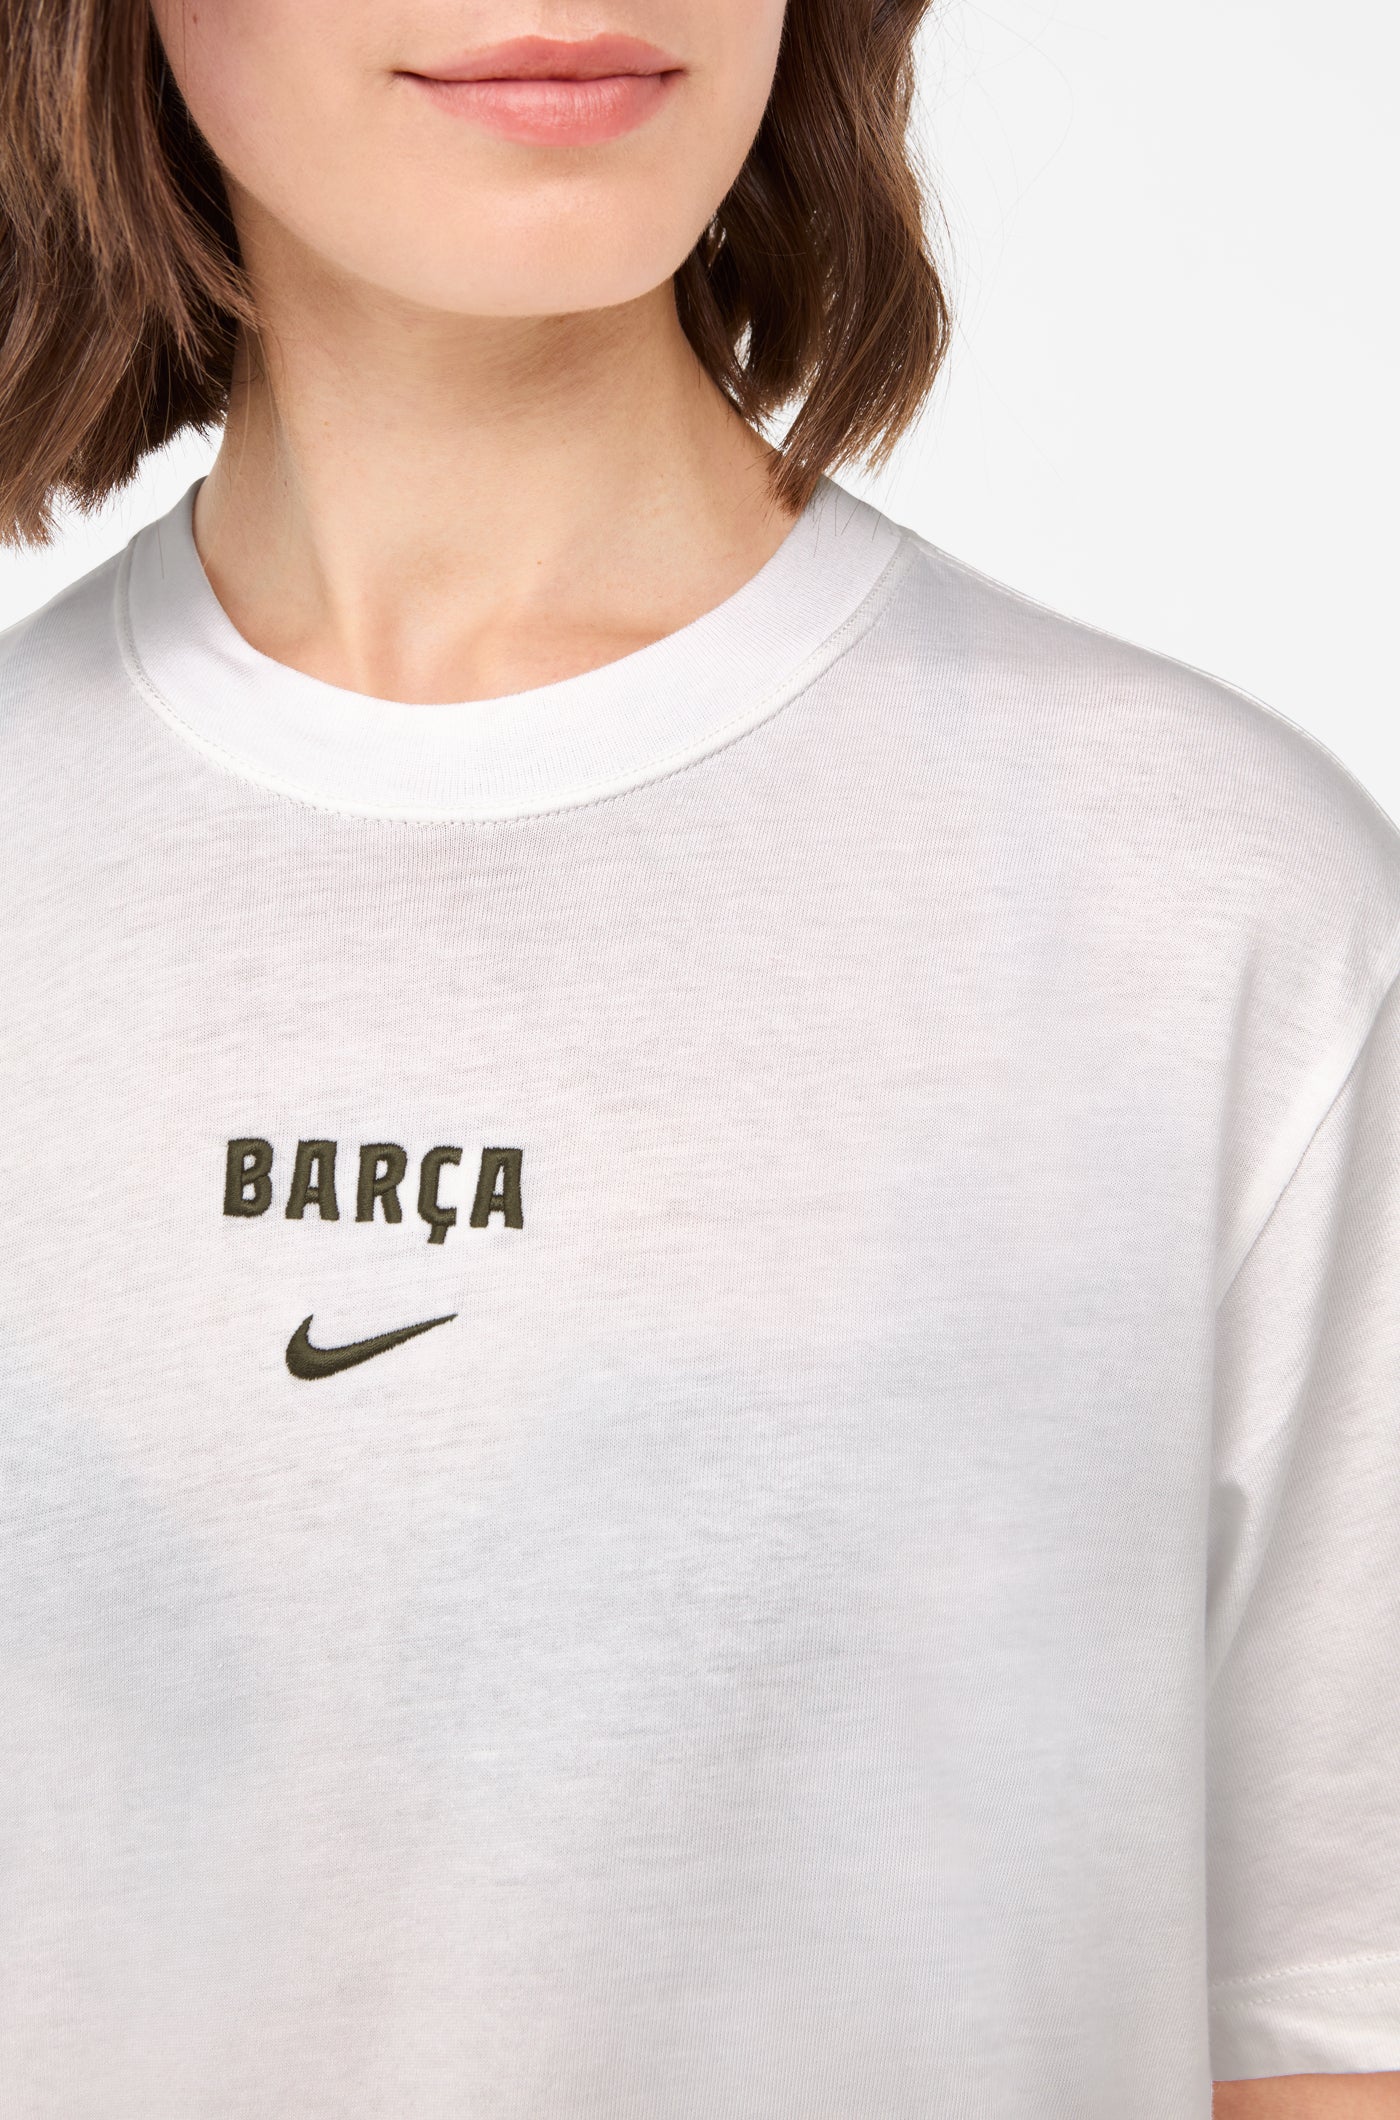 T-shirt manches courtes blanc Barça Nike - Femme